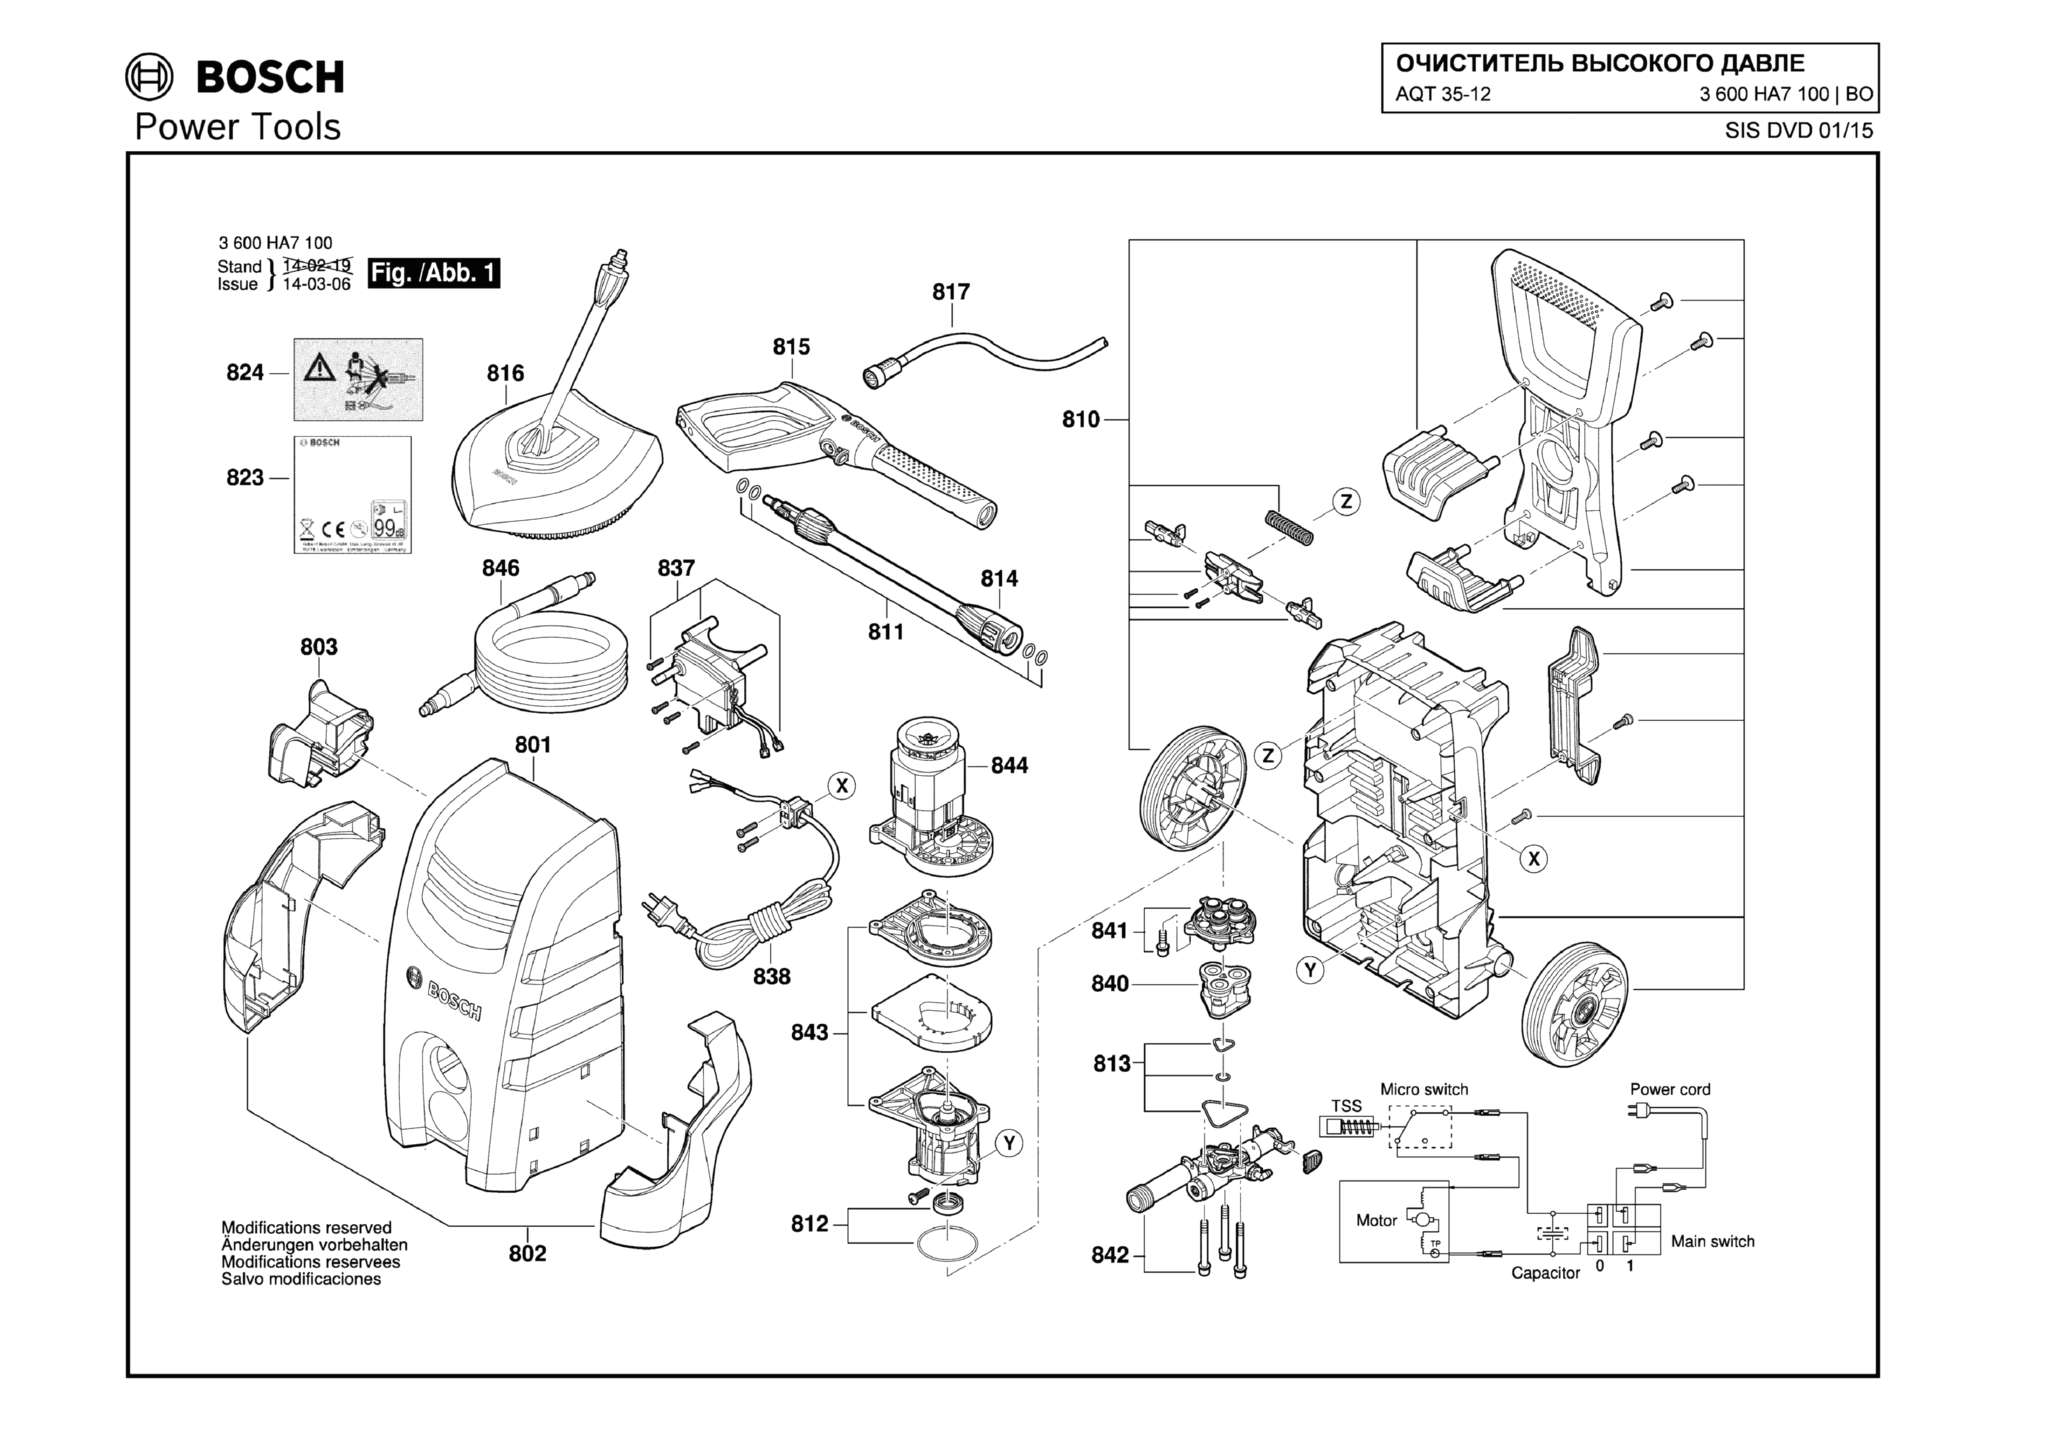 Запчасти, схема и деталировка Bosch AQT 35-12 (ТИП 3600HA7100)